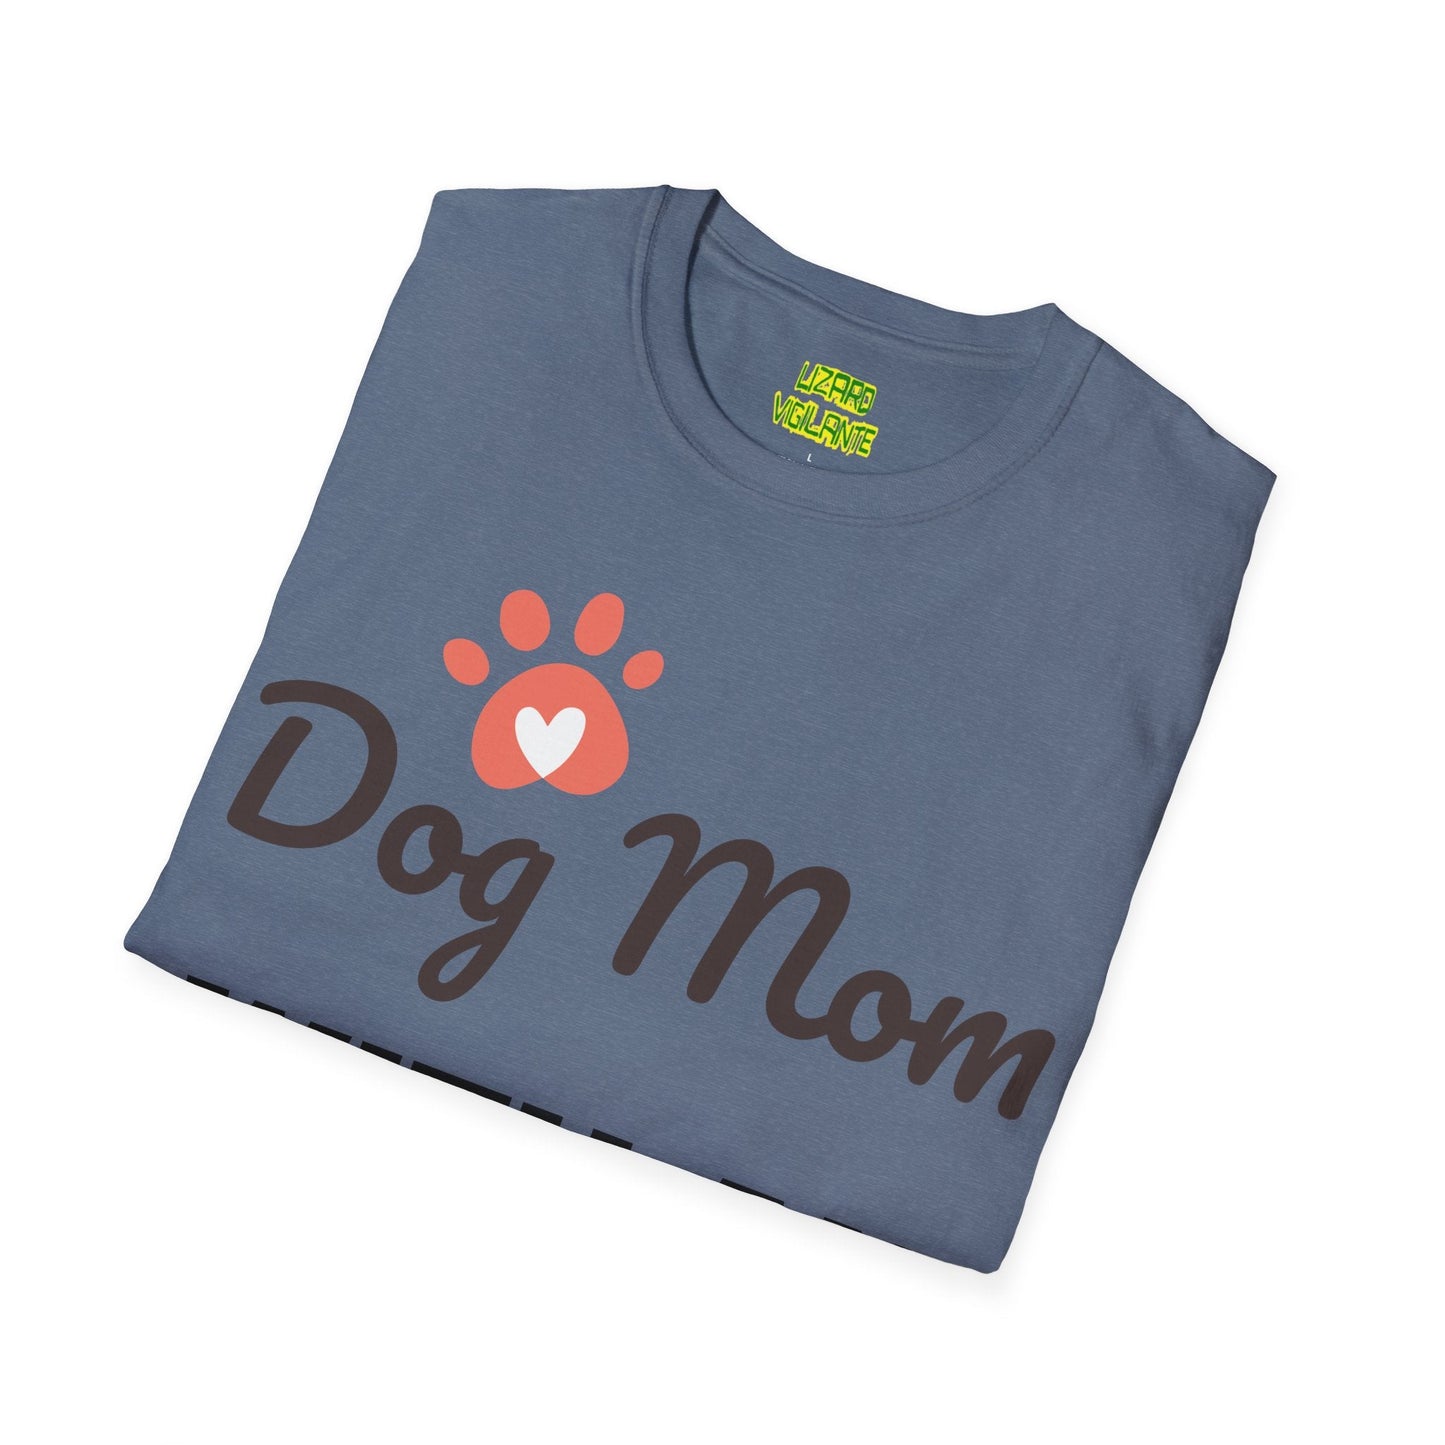 Dog Mom WITH AN ATTITUDE Unisex Softstyle T-Shirt - Lizard Vigilante